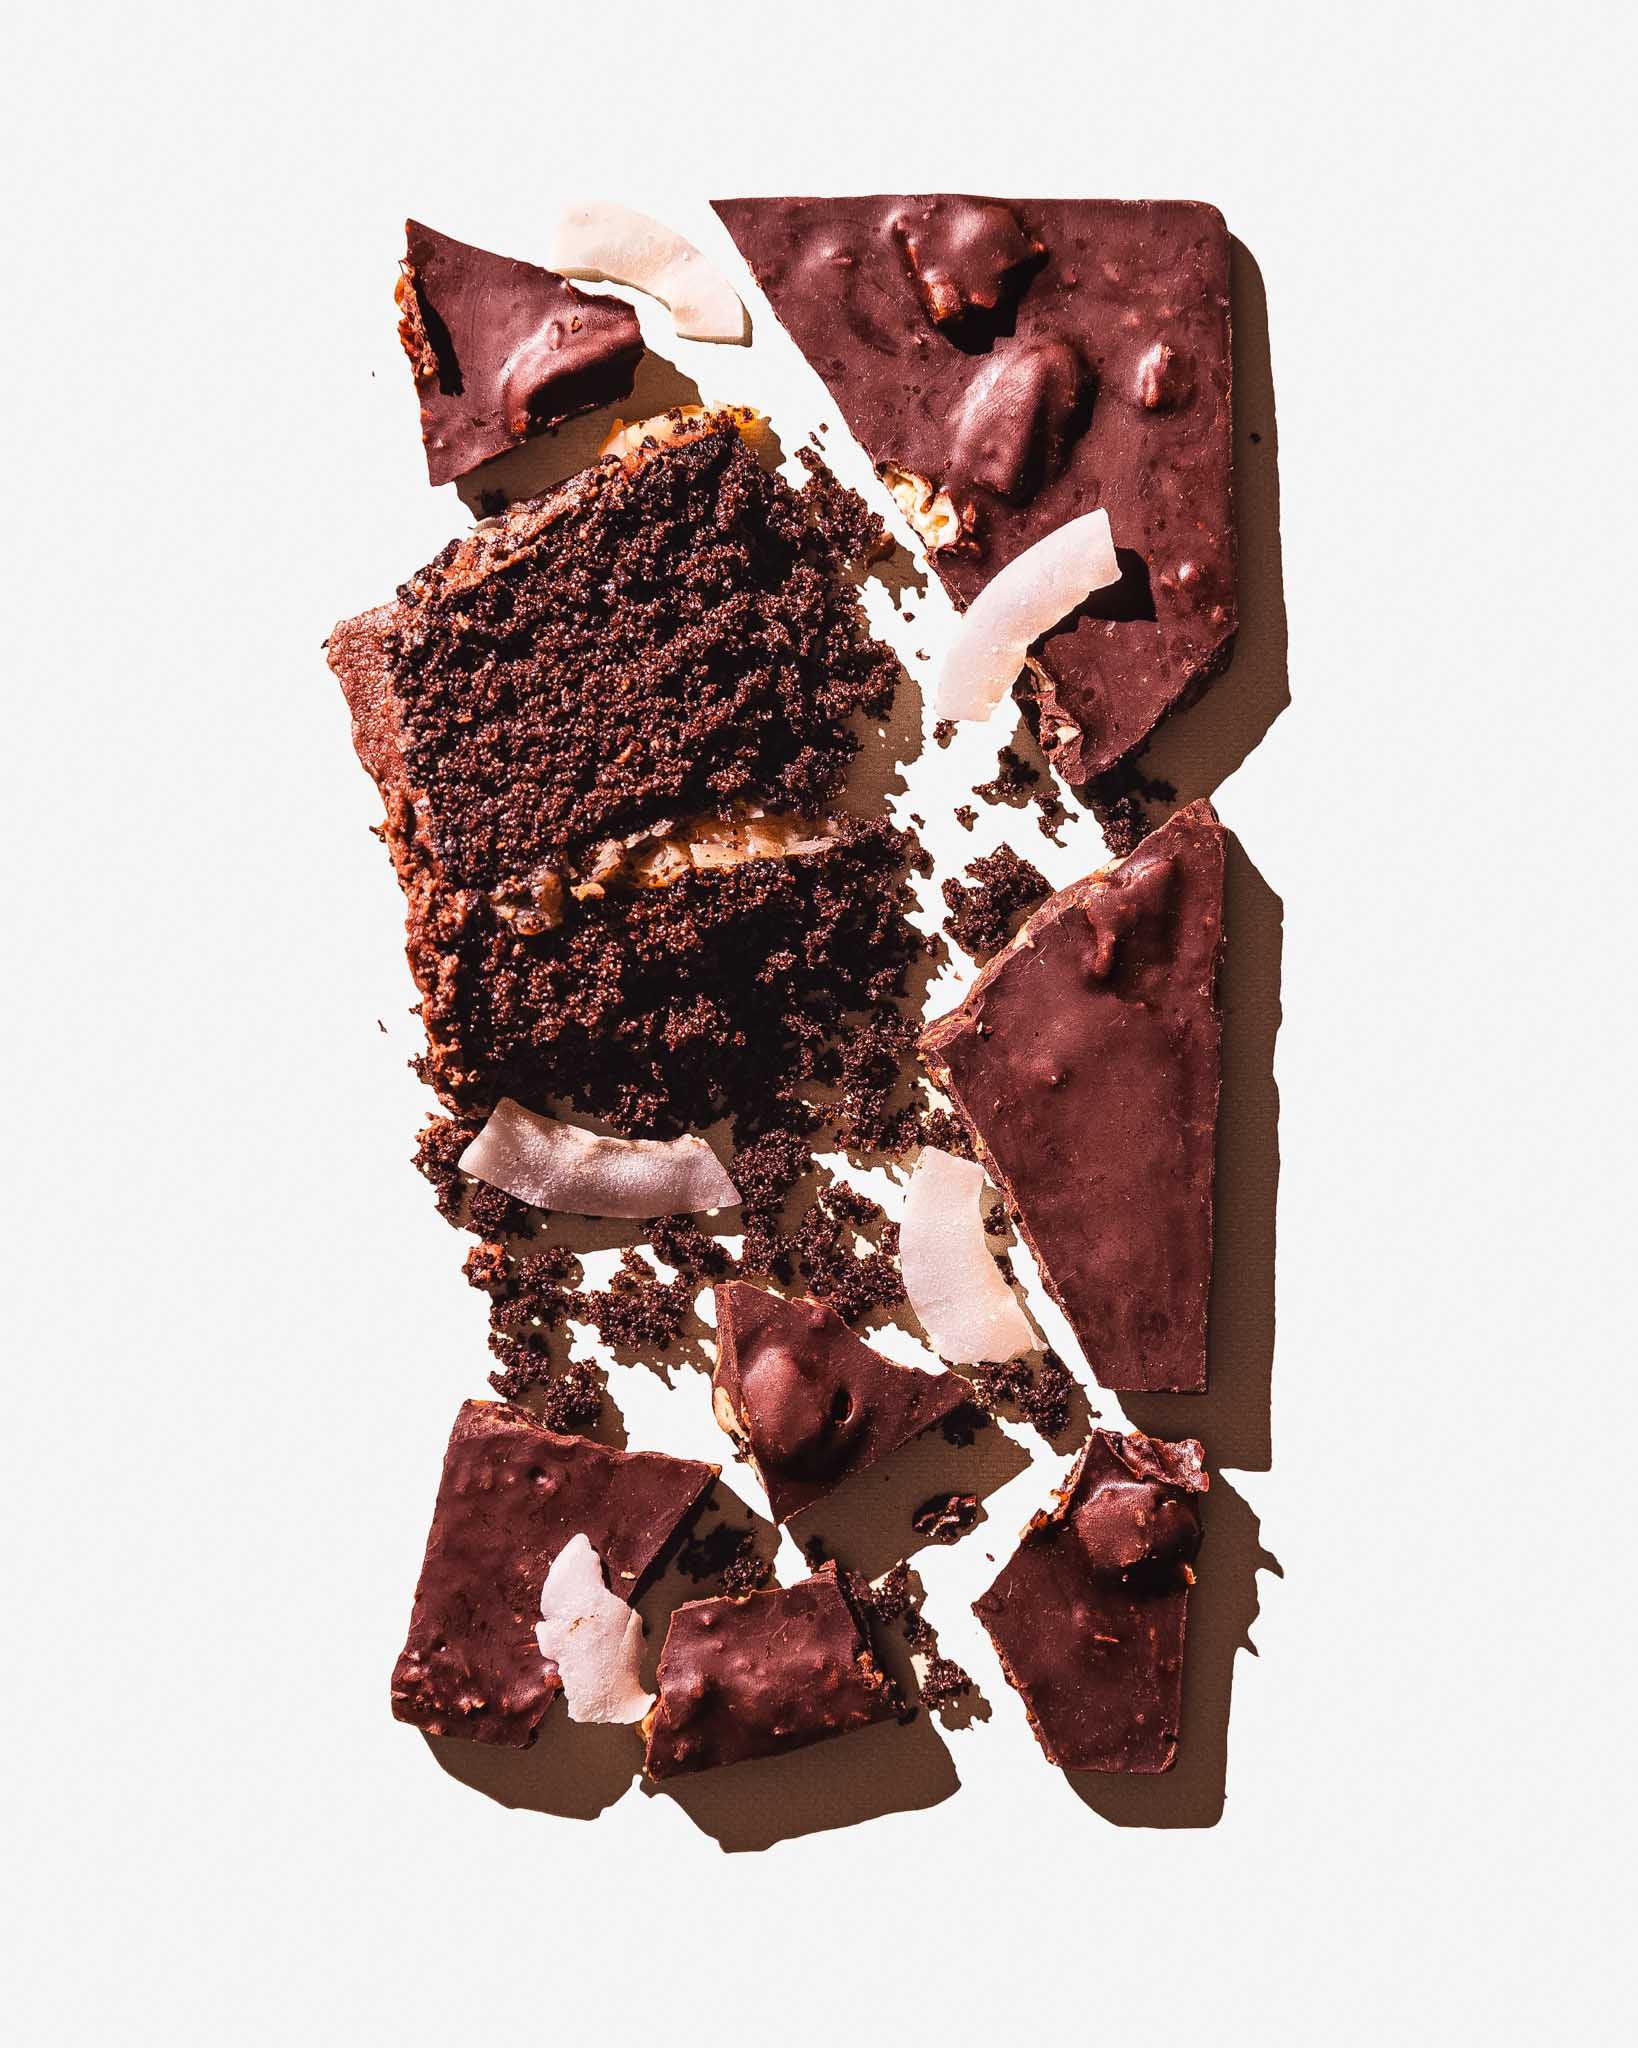 Black Choco Cake with Chocolate bar topping